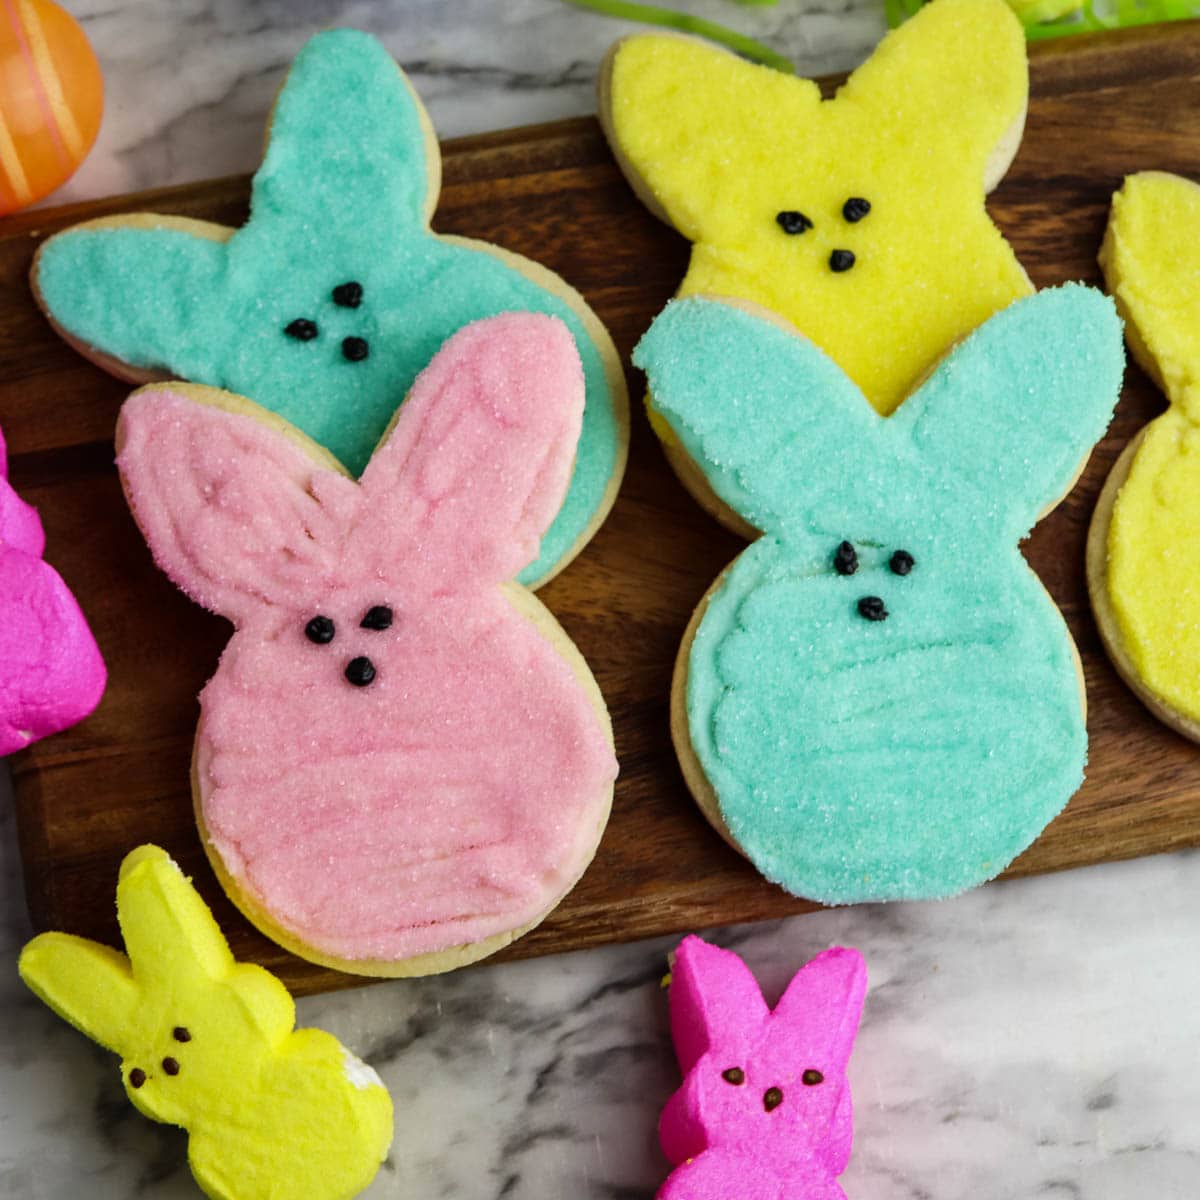 Bunny sugar cookies decorated with sanding sugar to look like peeps.